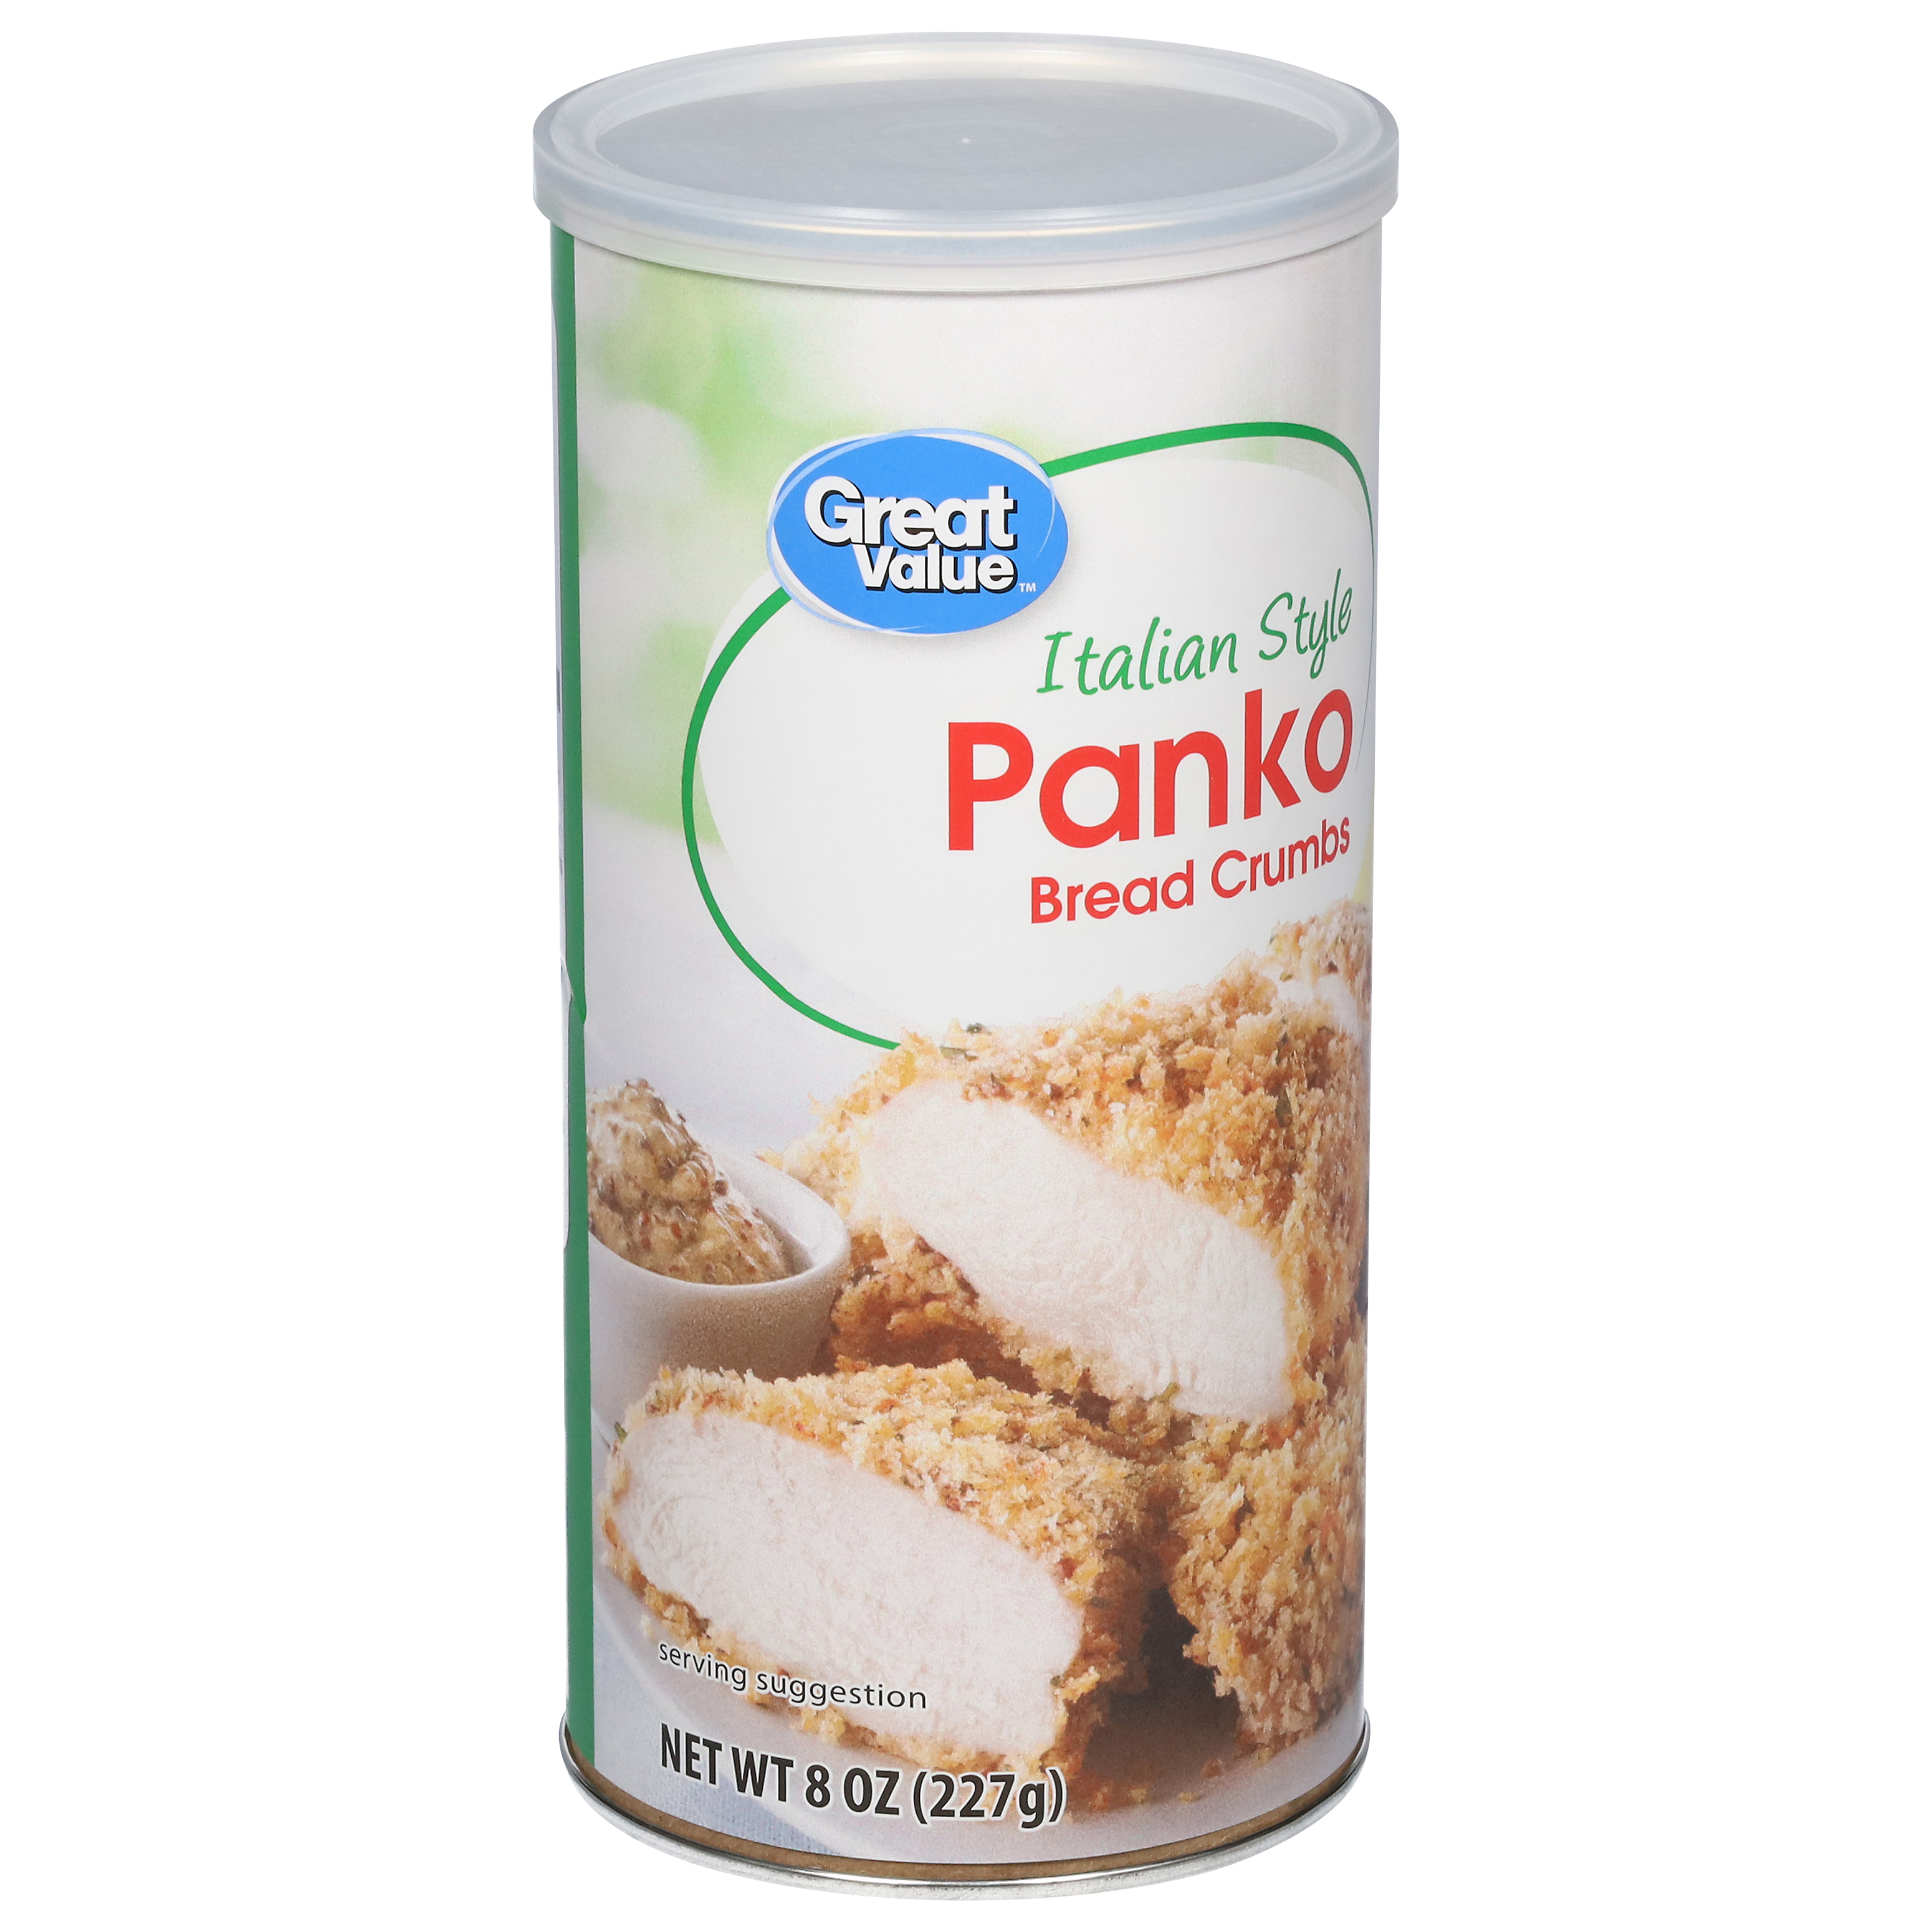 Great Value Italian Style Panko Bread Crumbs, 8 oz - image 2 of 12